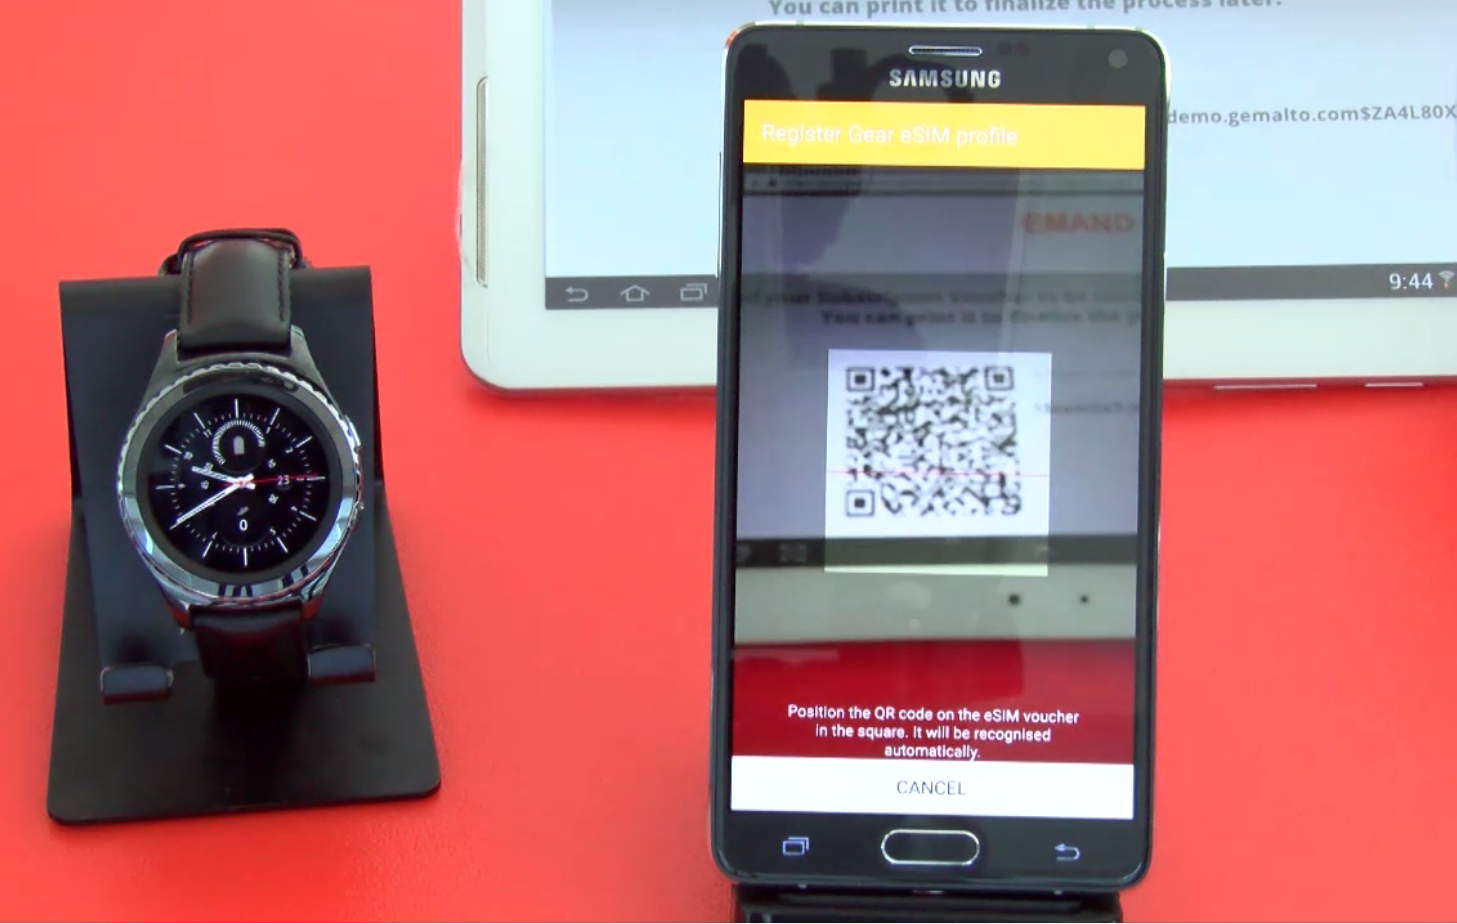 Smartwatch Samsung Gear S2 mobile subscription activation flows via QR code.png